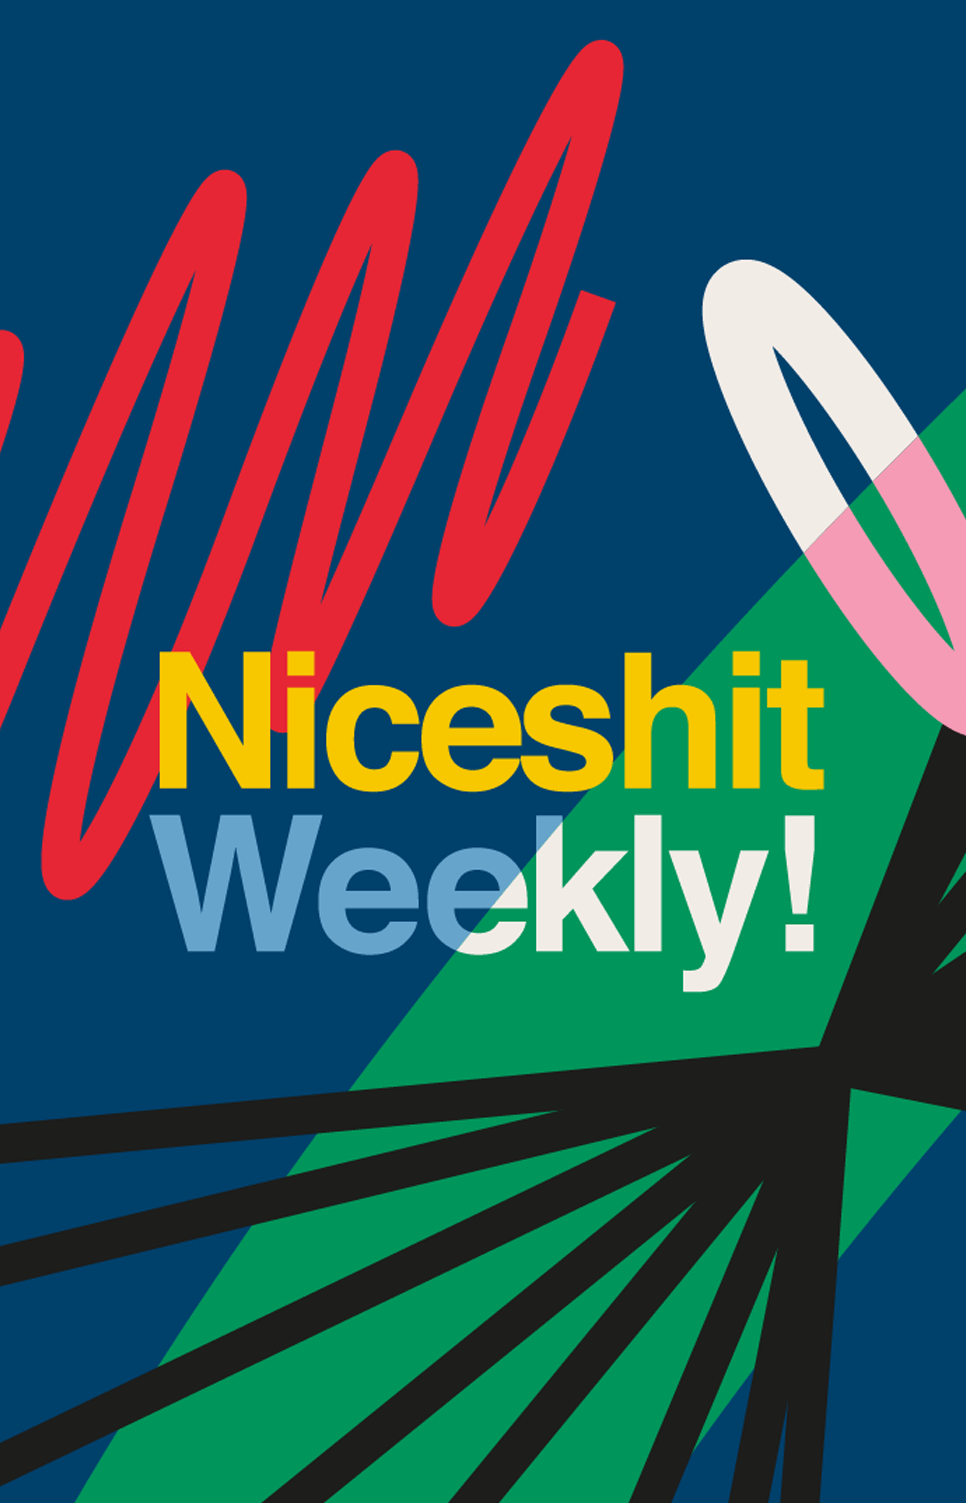 Niceshit Weekly